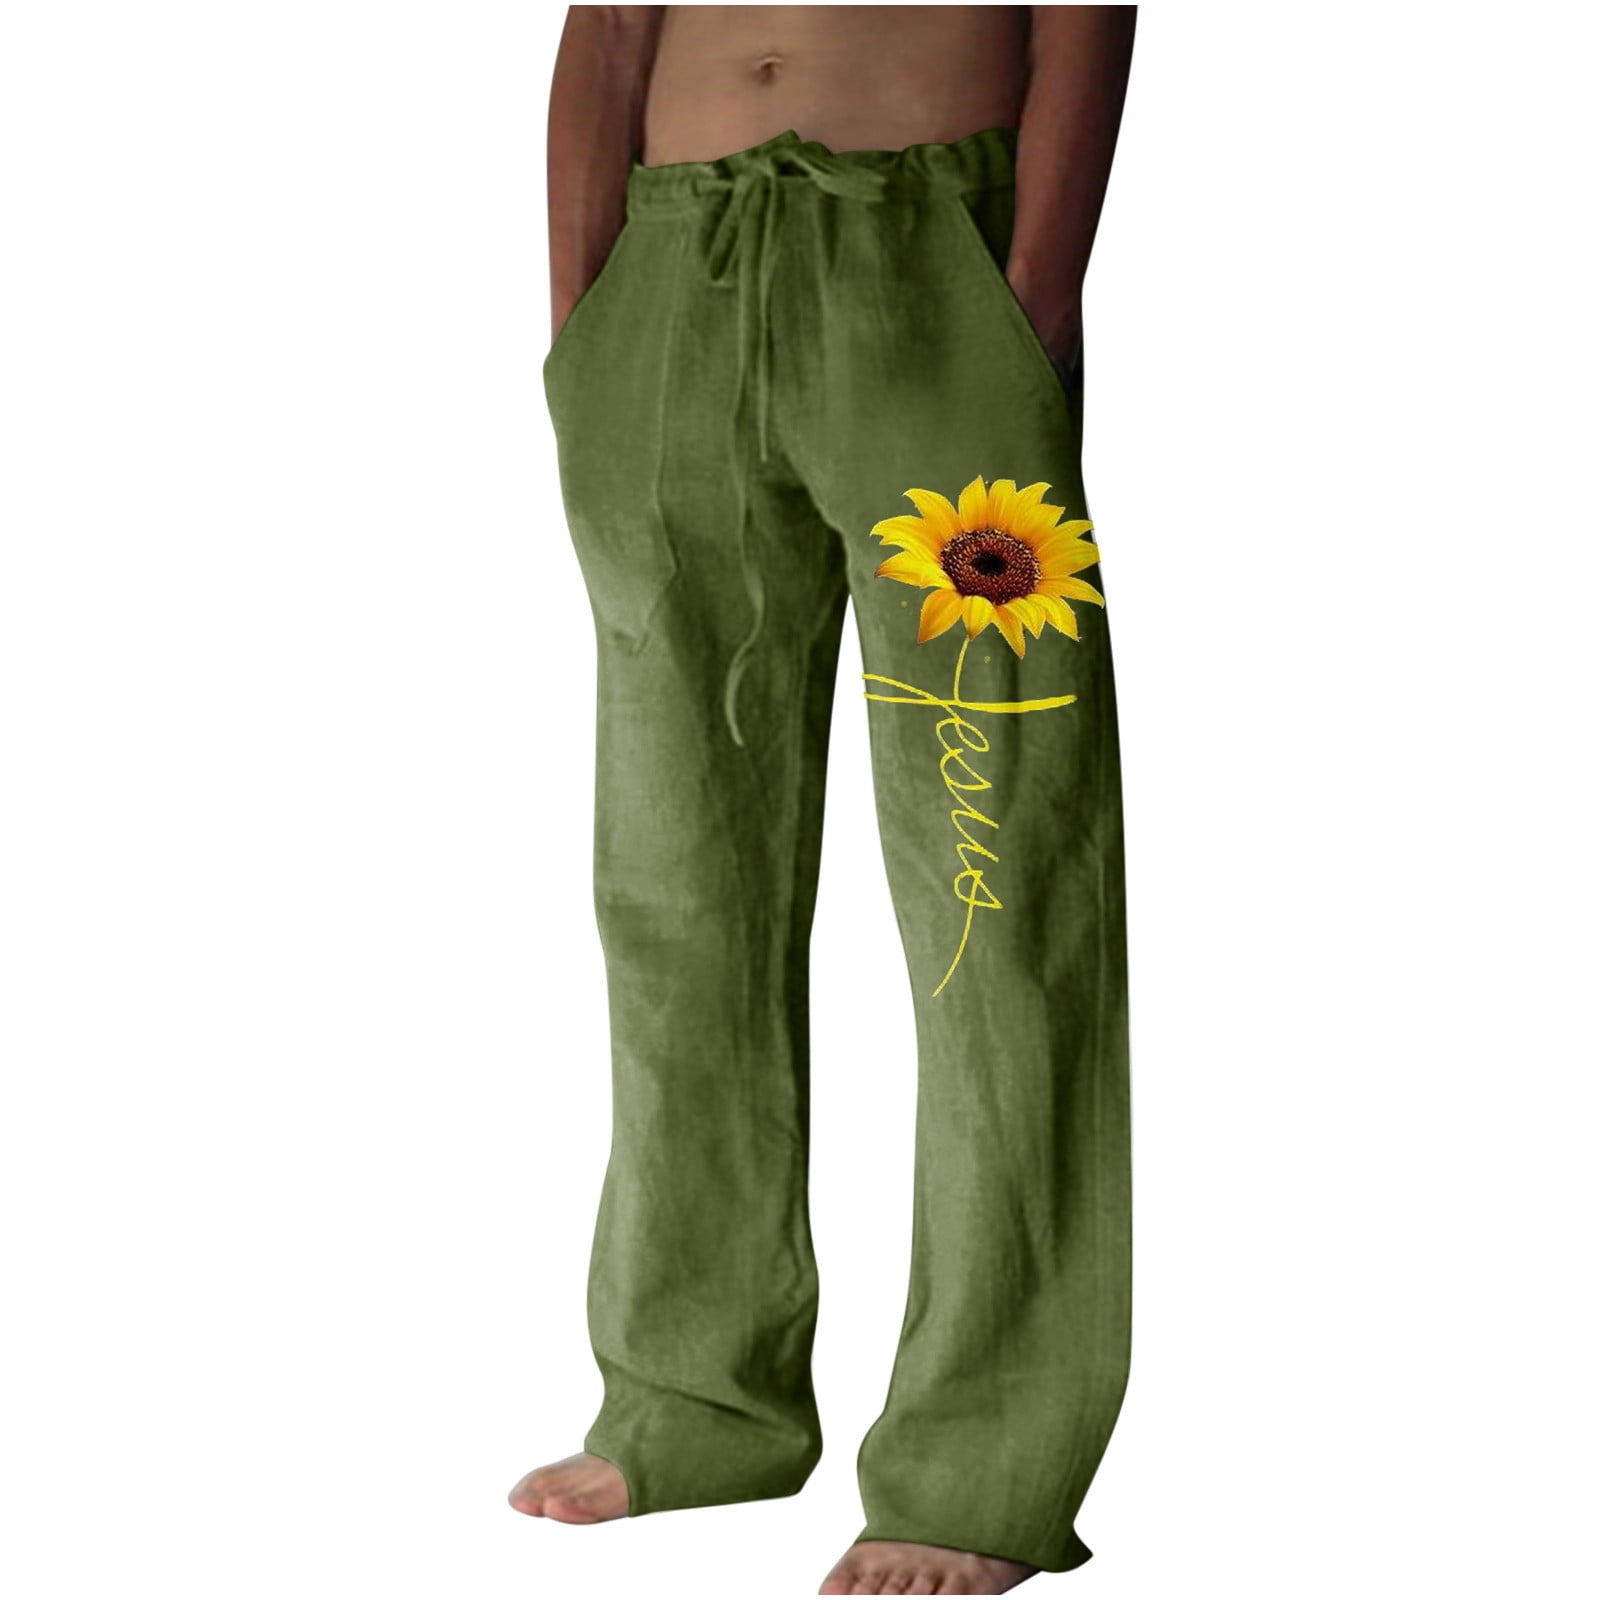 Zkozptok Men's Cotton Linen Pants Casual Comfy Baggy Fit Drawstring  Sweatpants Outdoor Trousers,Green,S 